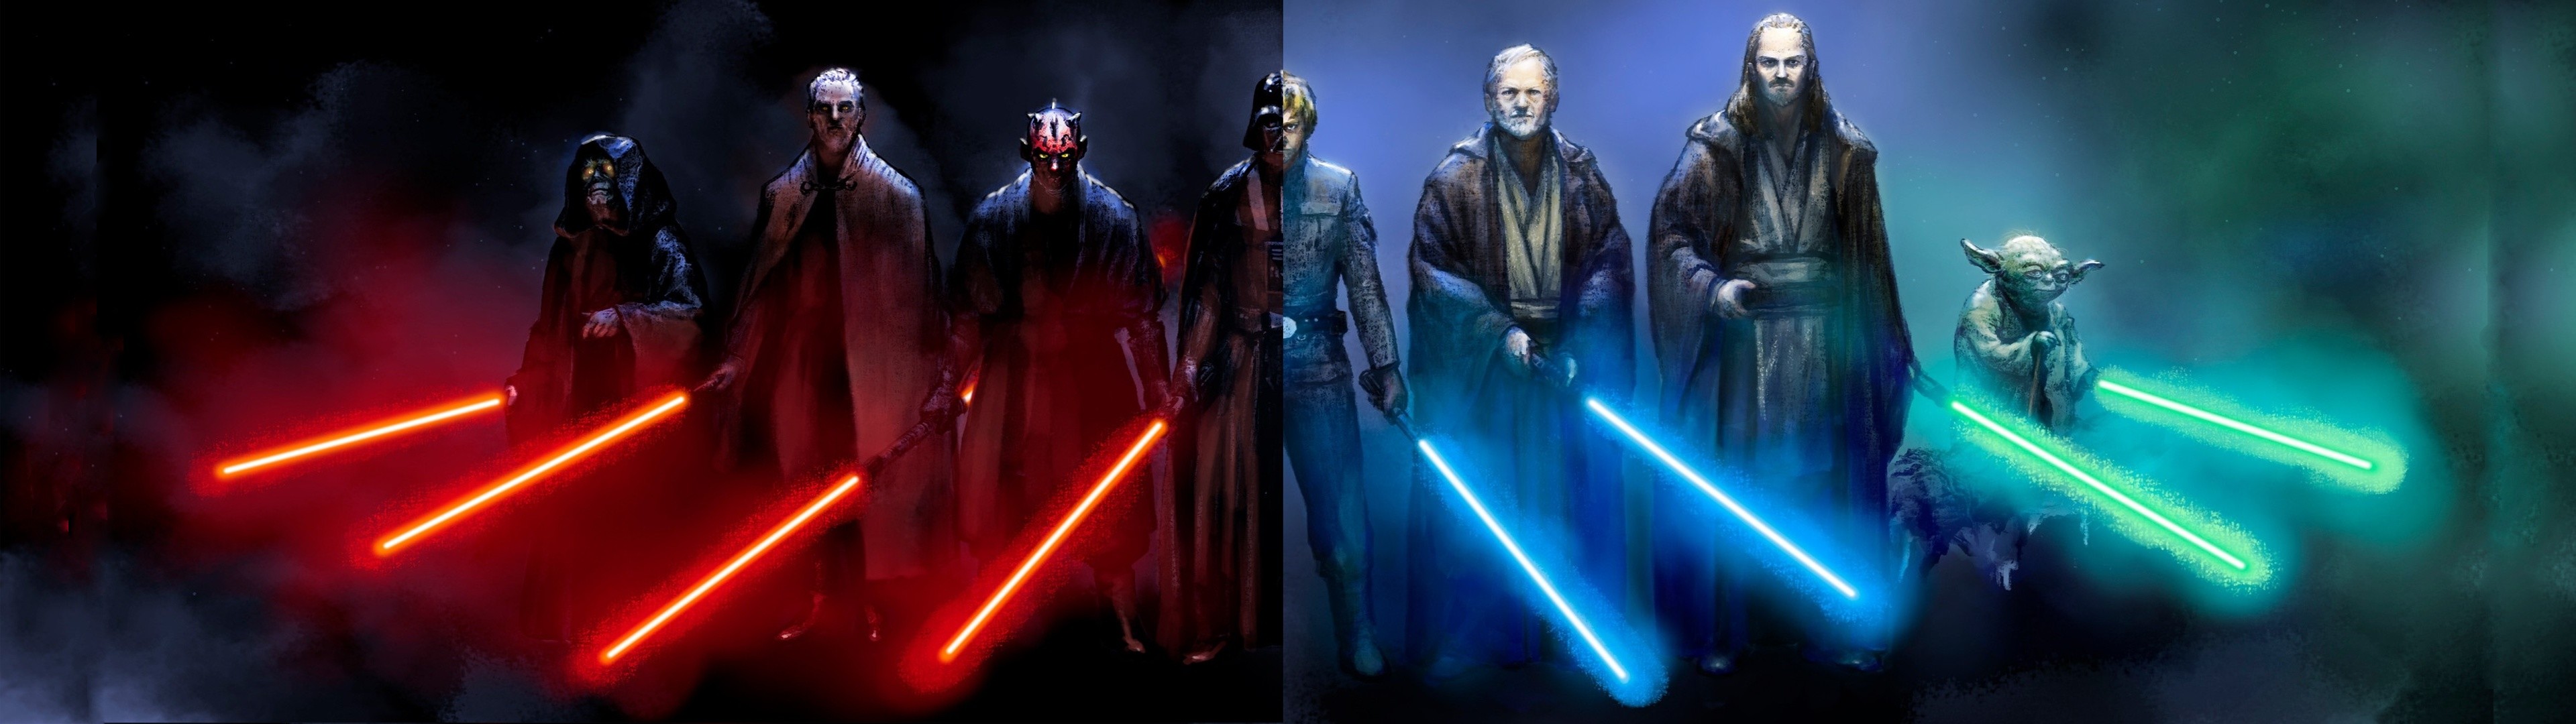 Star Wars Wallpaper Image